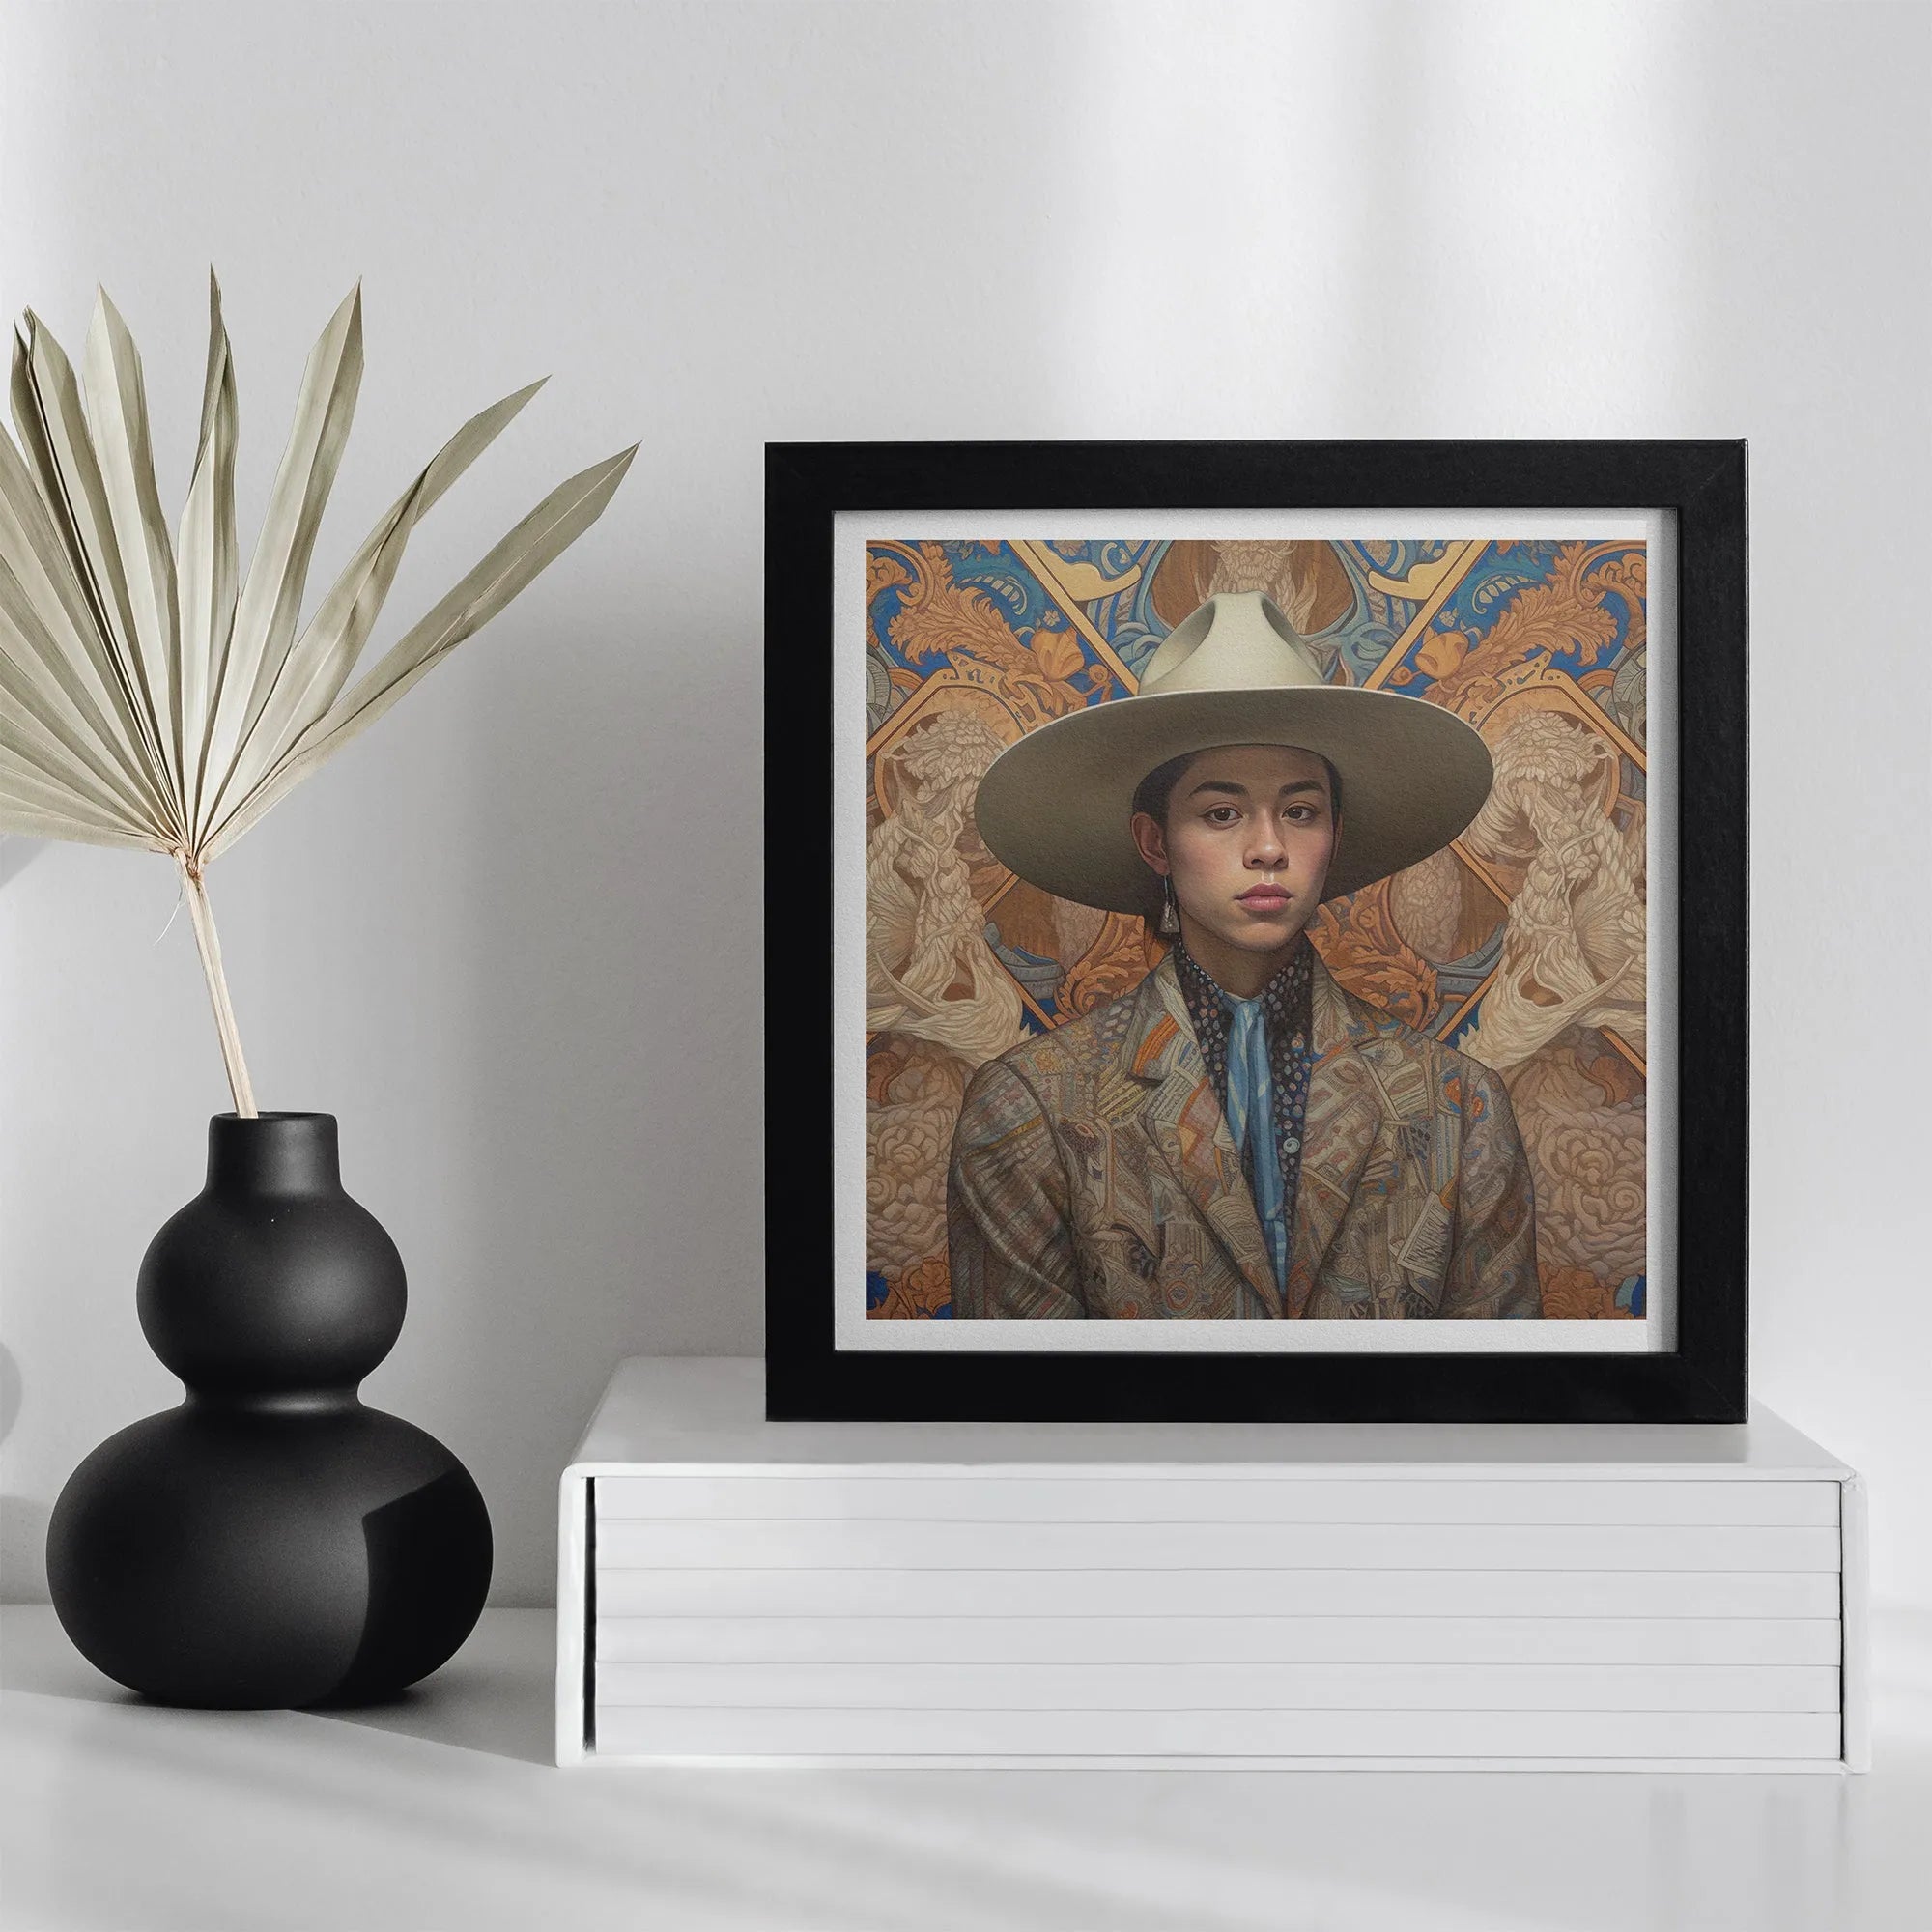 Angel The Transgender Cowboy - F2m Dandy Latinx Outlaw Art - 16’x16’ - Posters Prints & Visual Artwork - Aesthetic Art